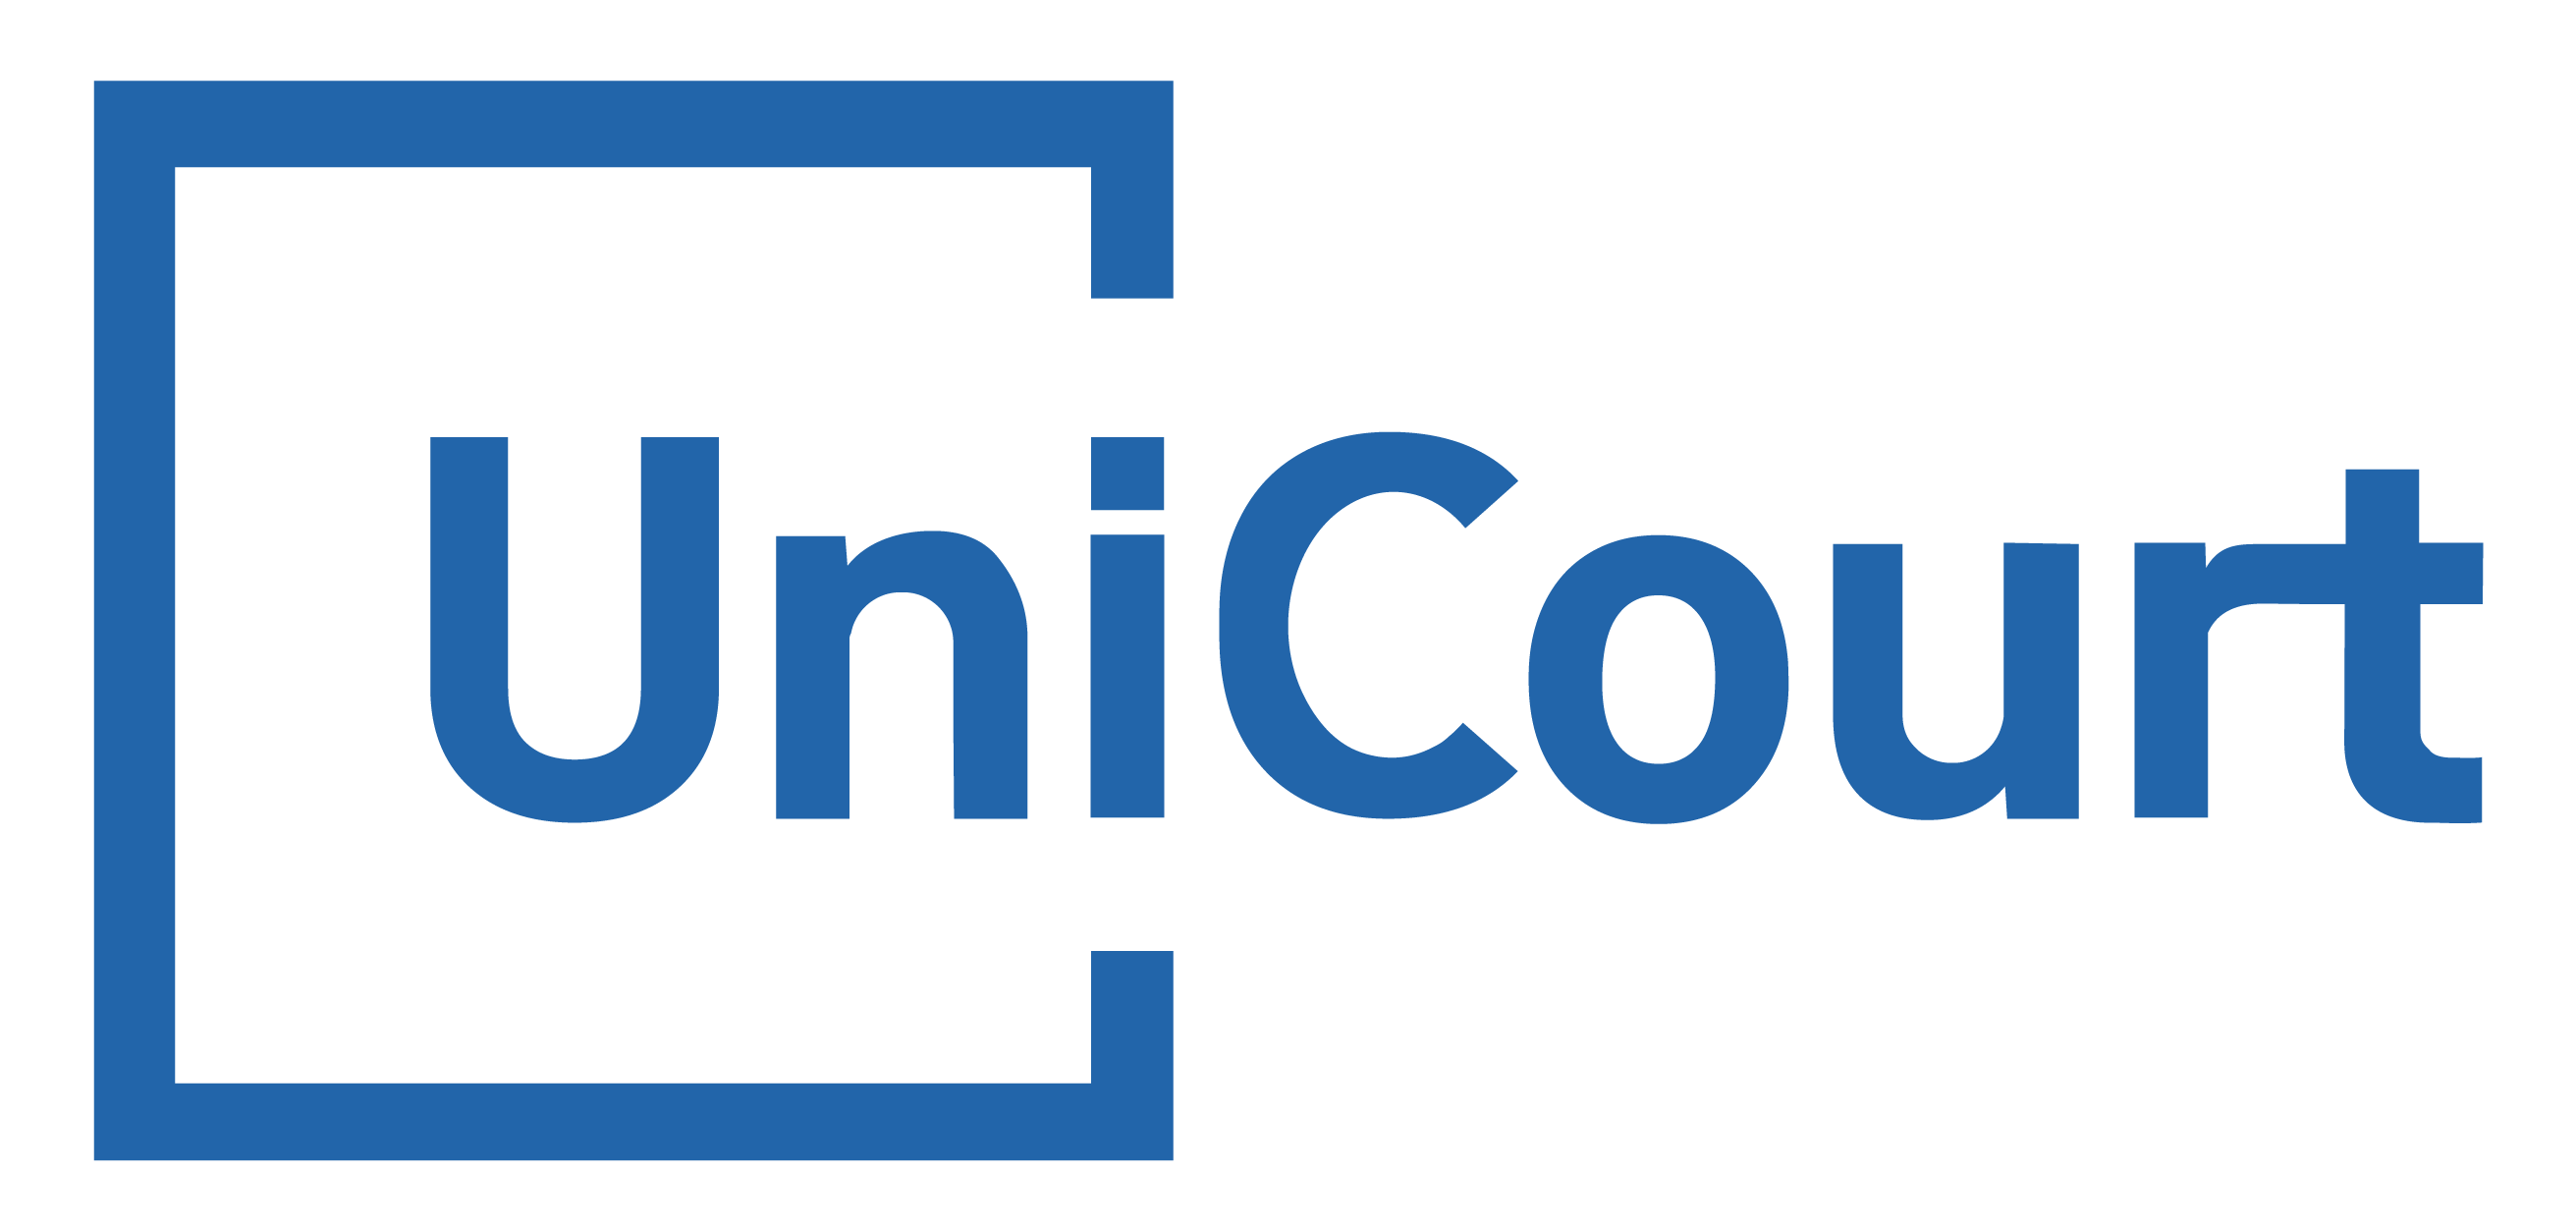 Unicourt